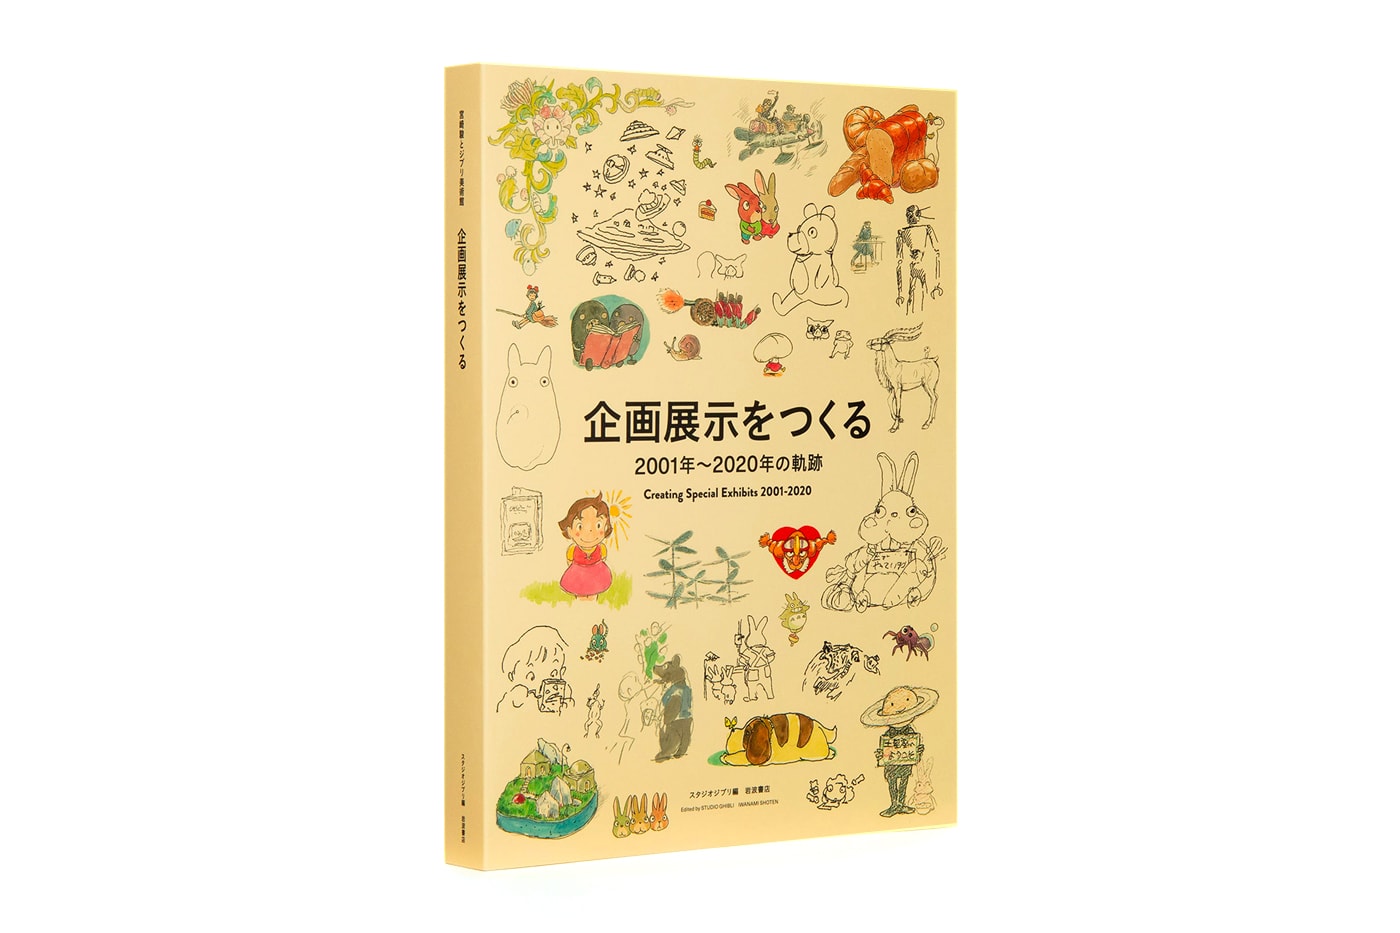 miyazaki hayao studio ghibli museum illustration art book info Mitaka two volume drawings imageboards artwork renderings exhibitions